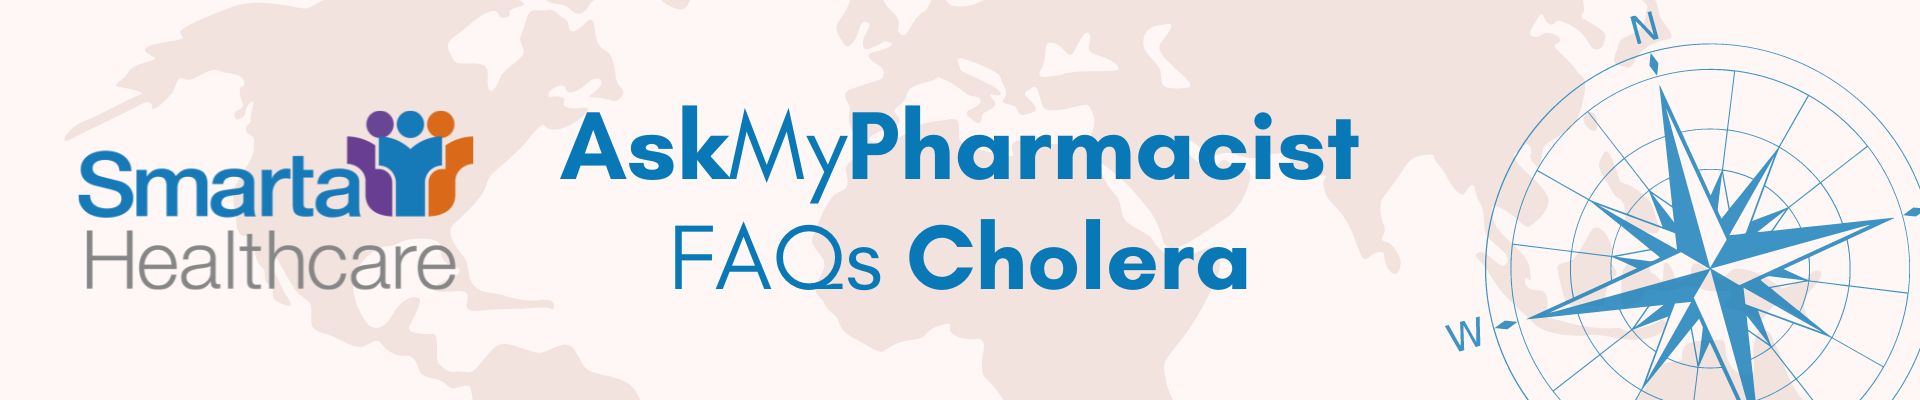 Smarta Healthcare AskMyPharmacist FAQs Cholera 